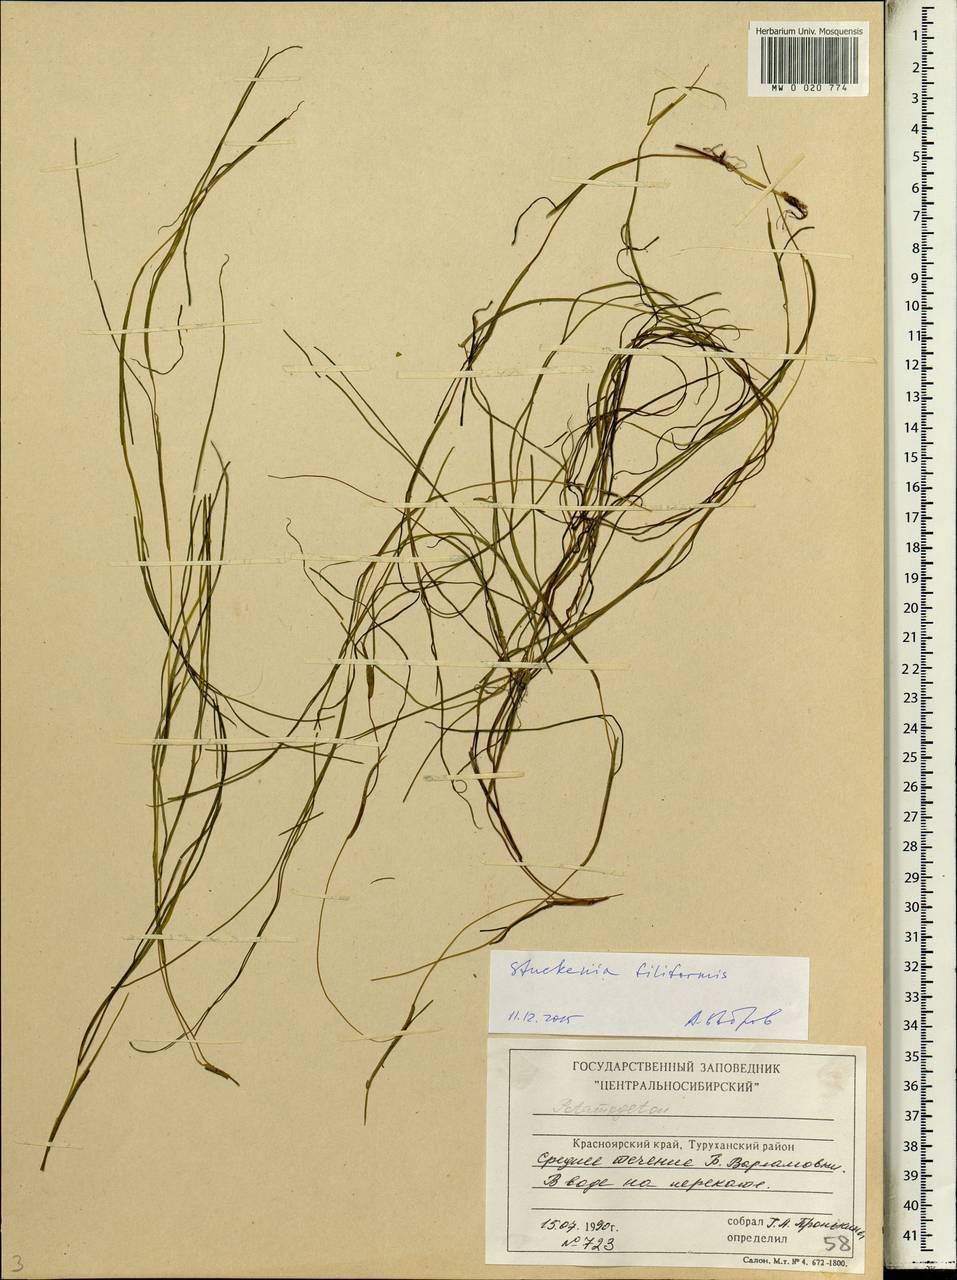 Stuckenia filiformis (Pers.) Börner, Siberia, Central Siberia (S3) (Russia)